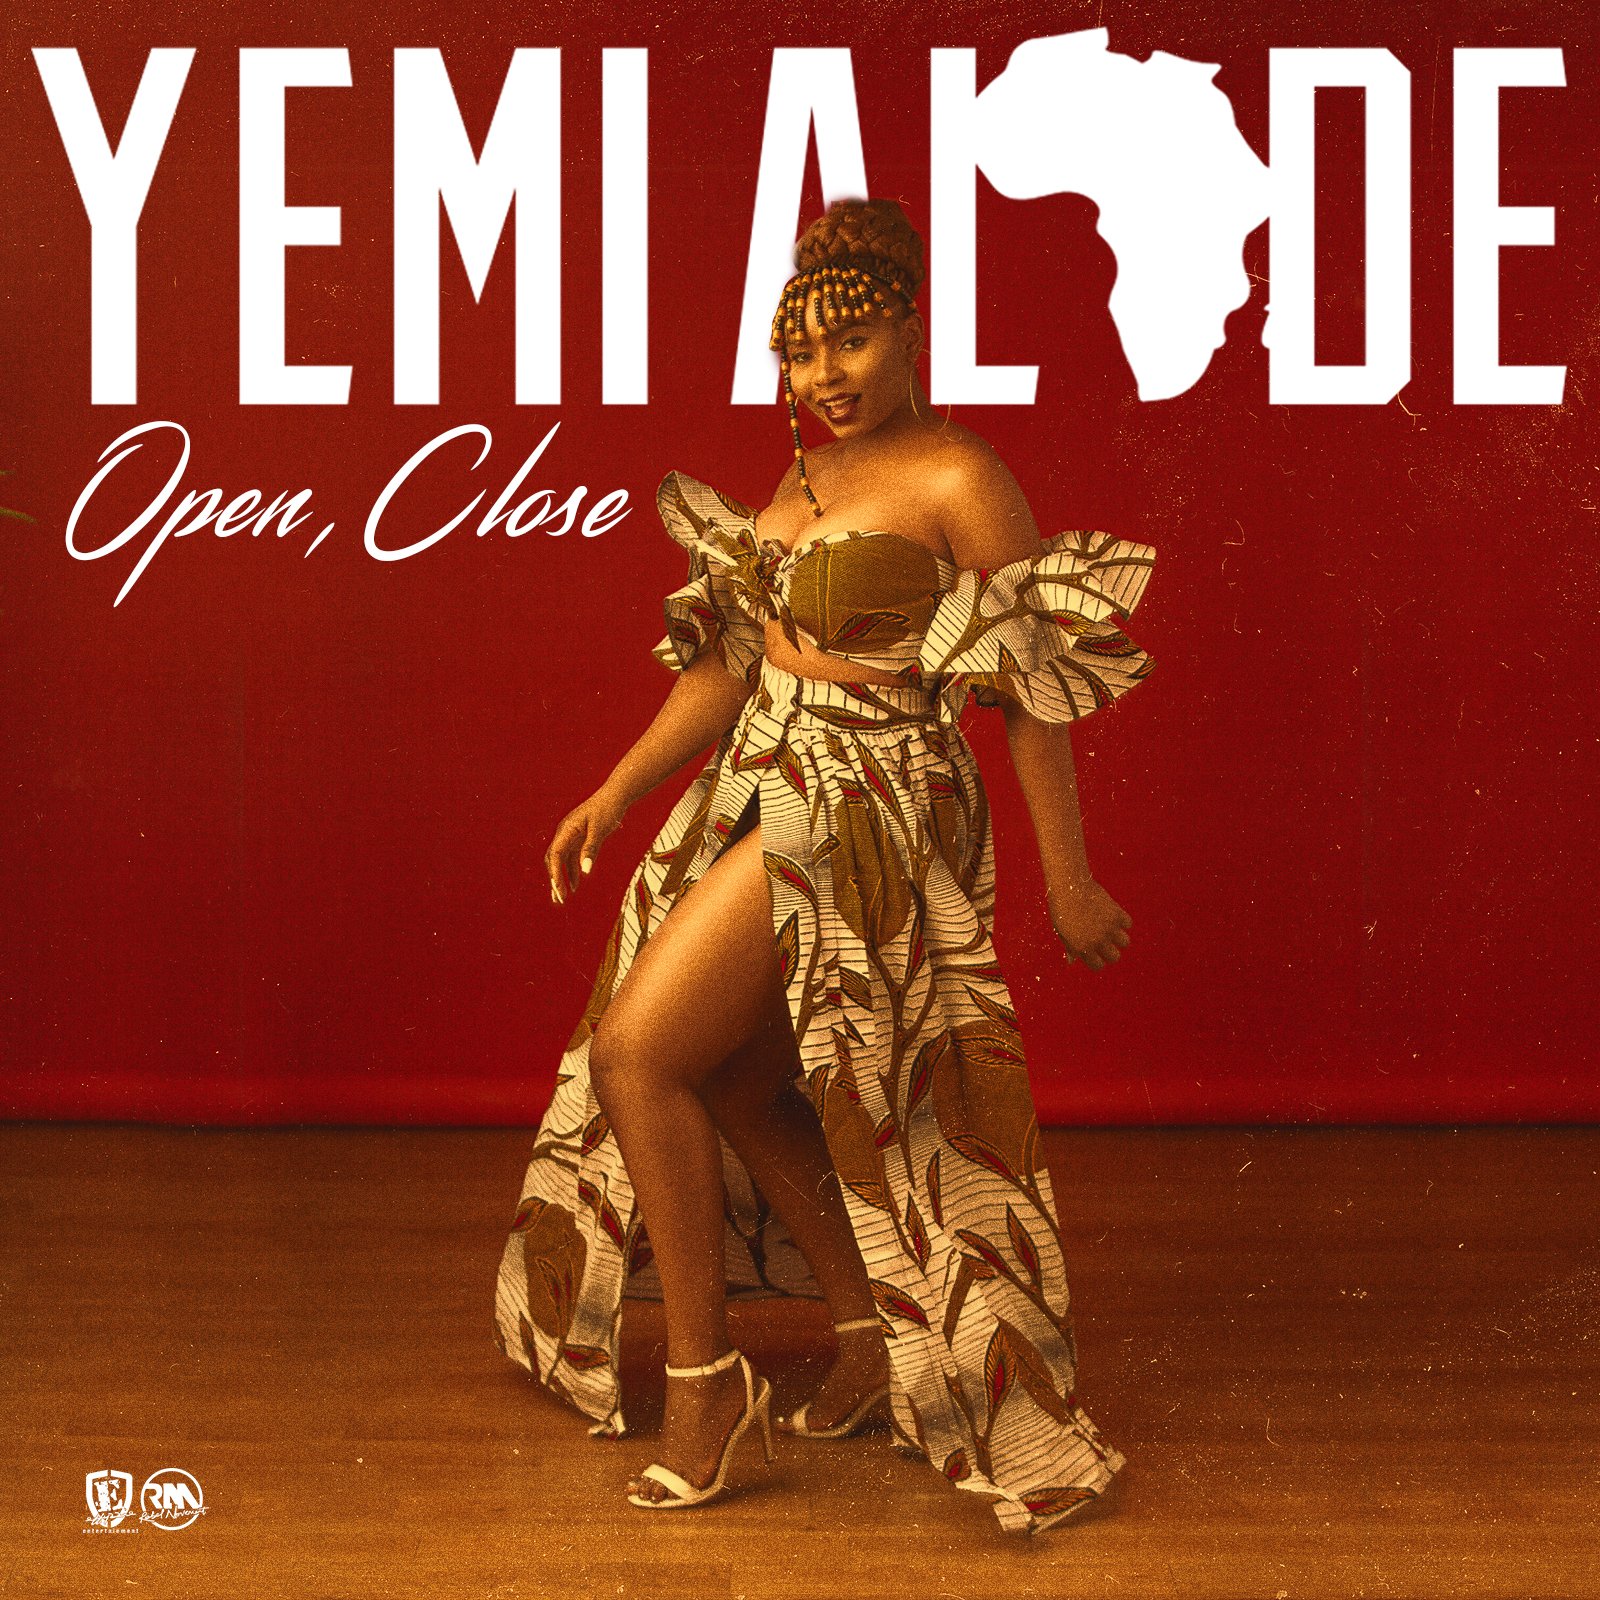 Yemi Alade – Open Close